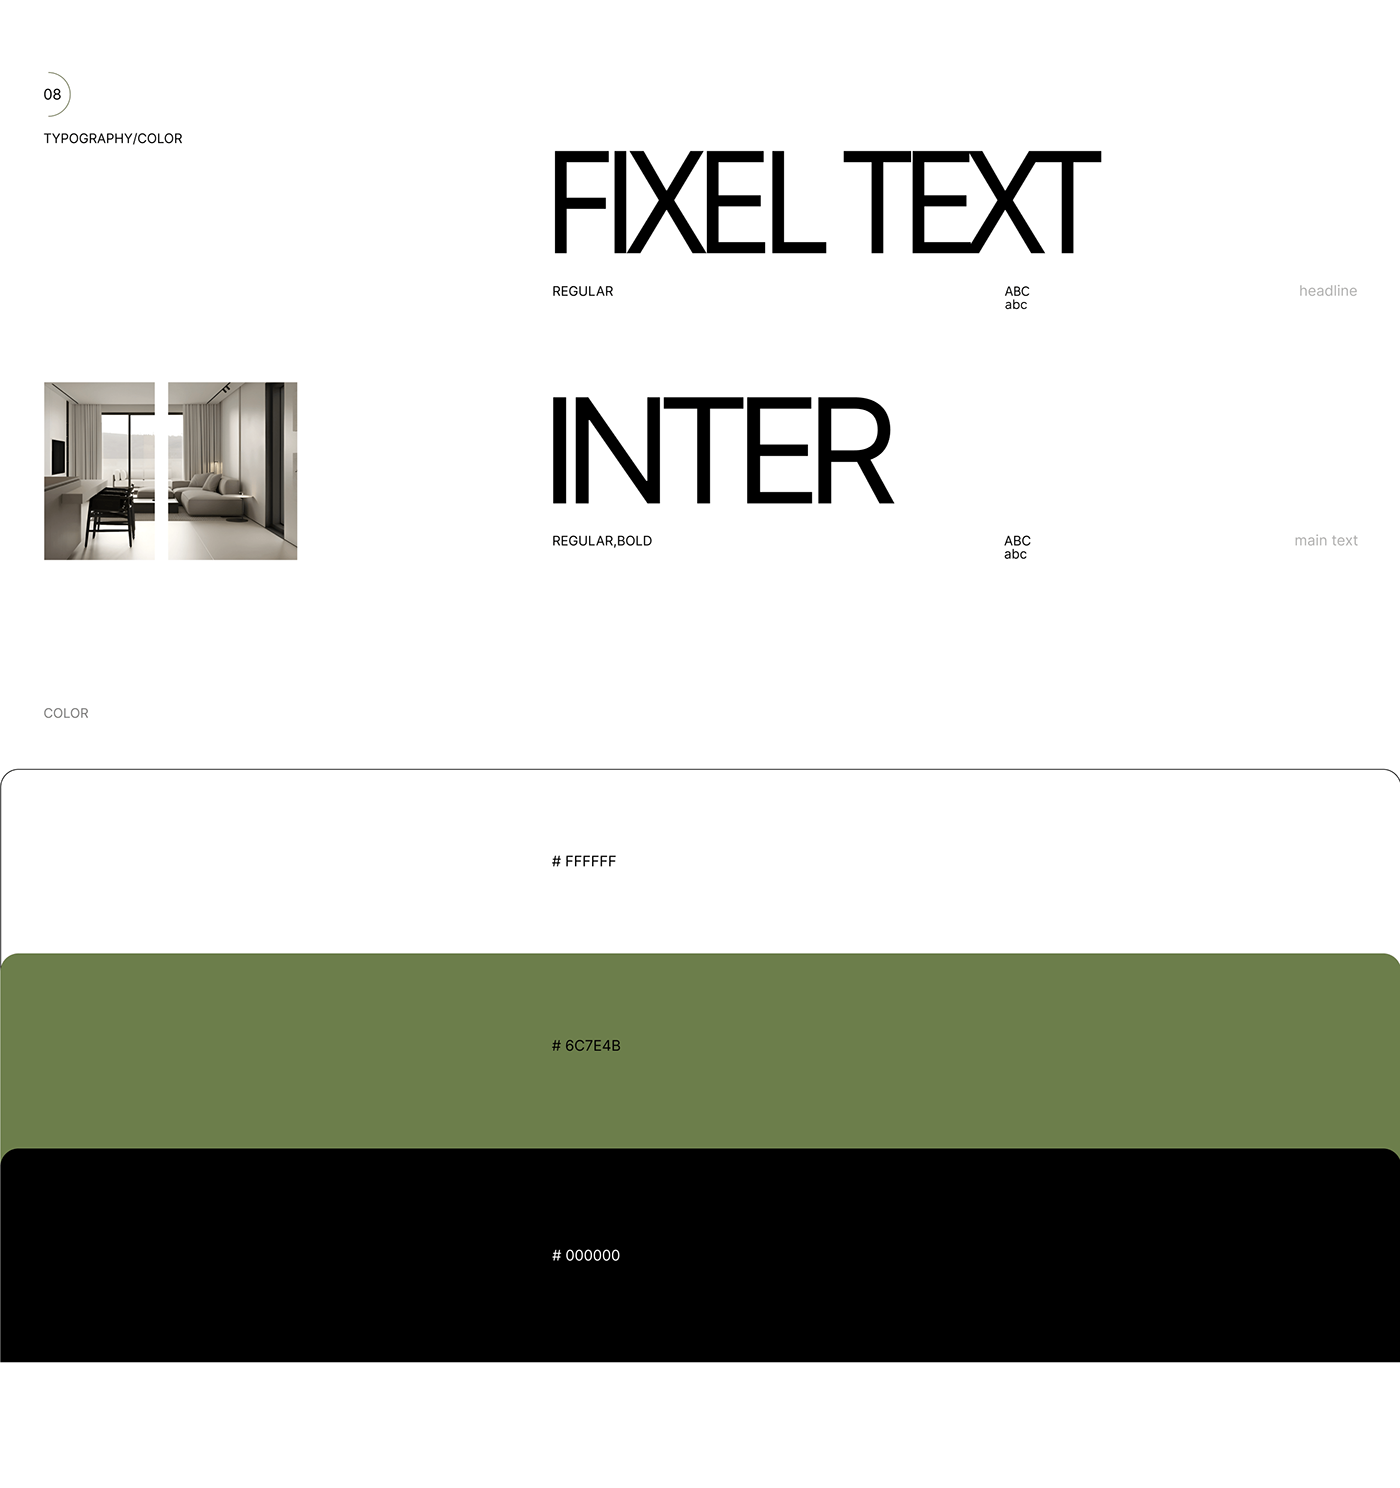 landing page UI/UX minimalist architecture Premium Design luxury modern interior design  Poster Design